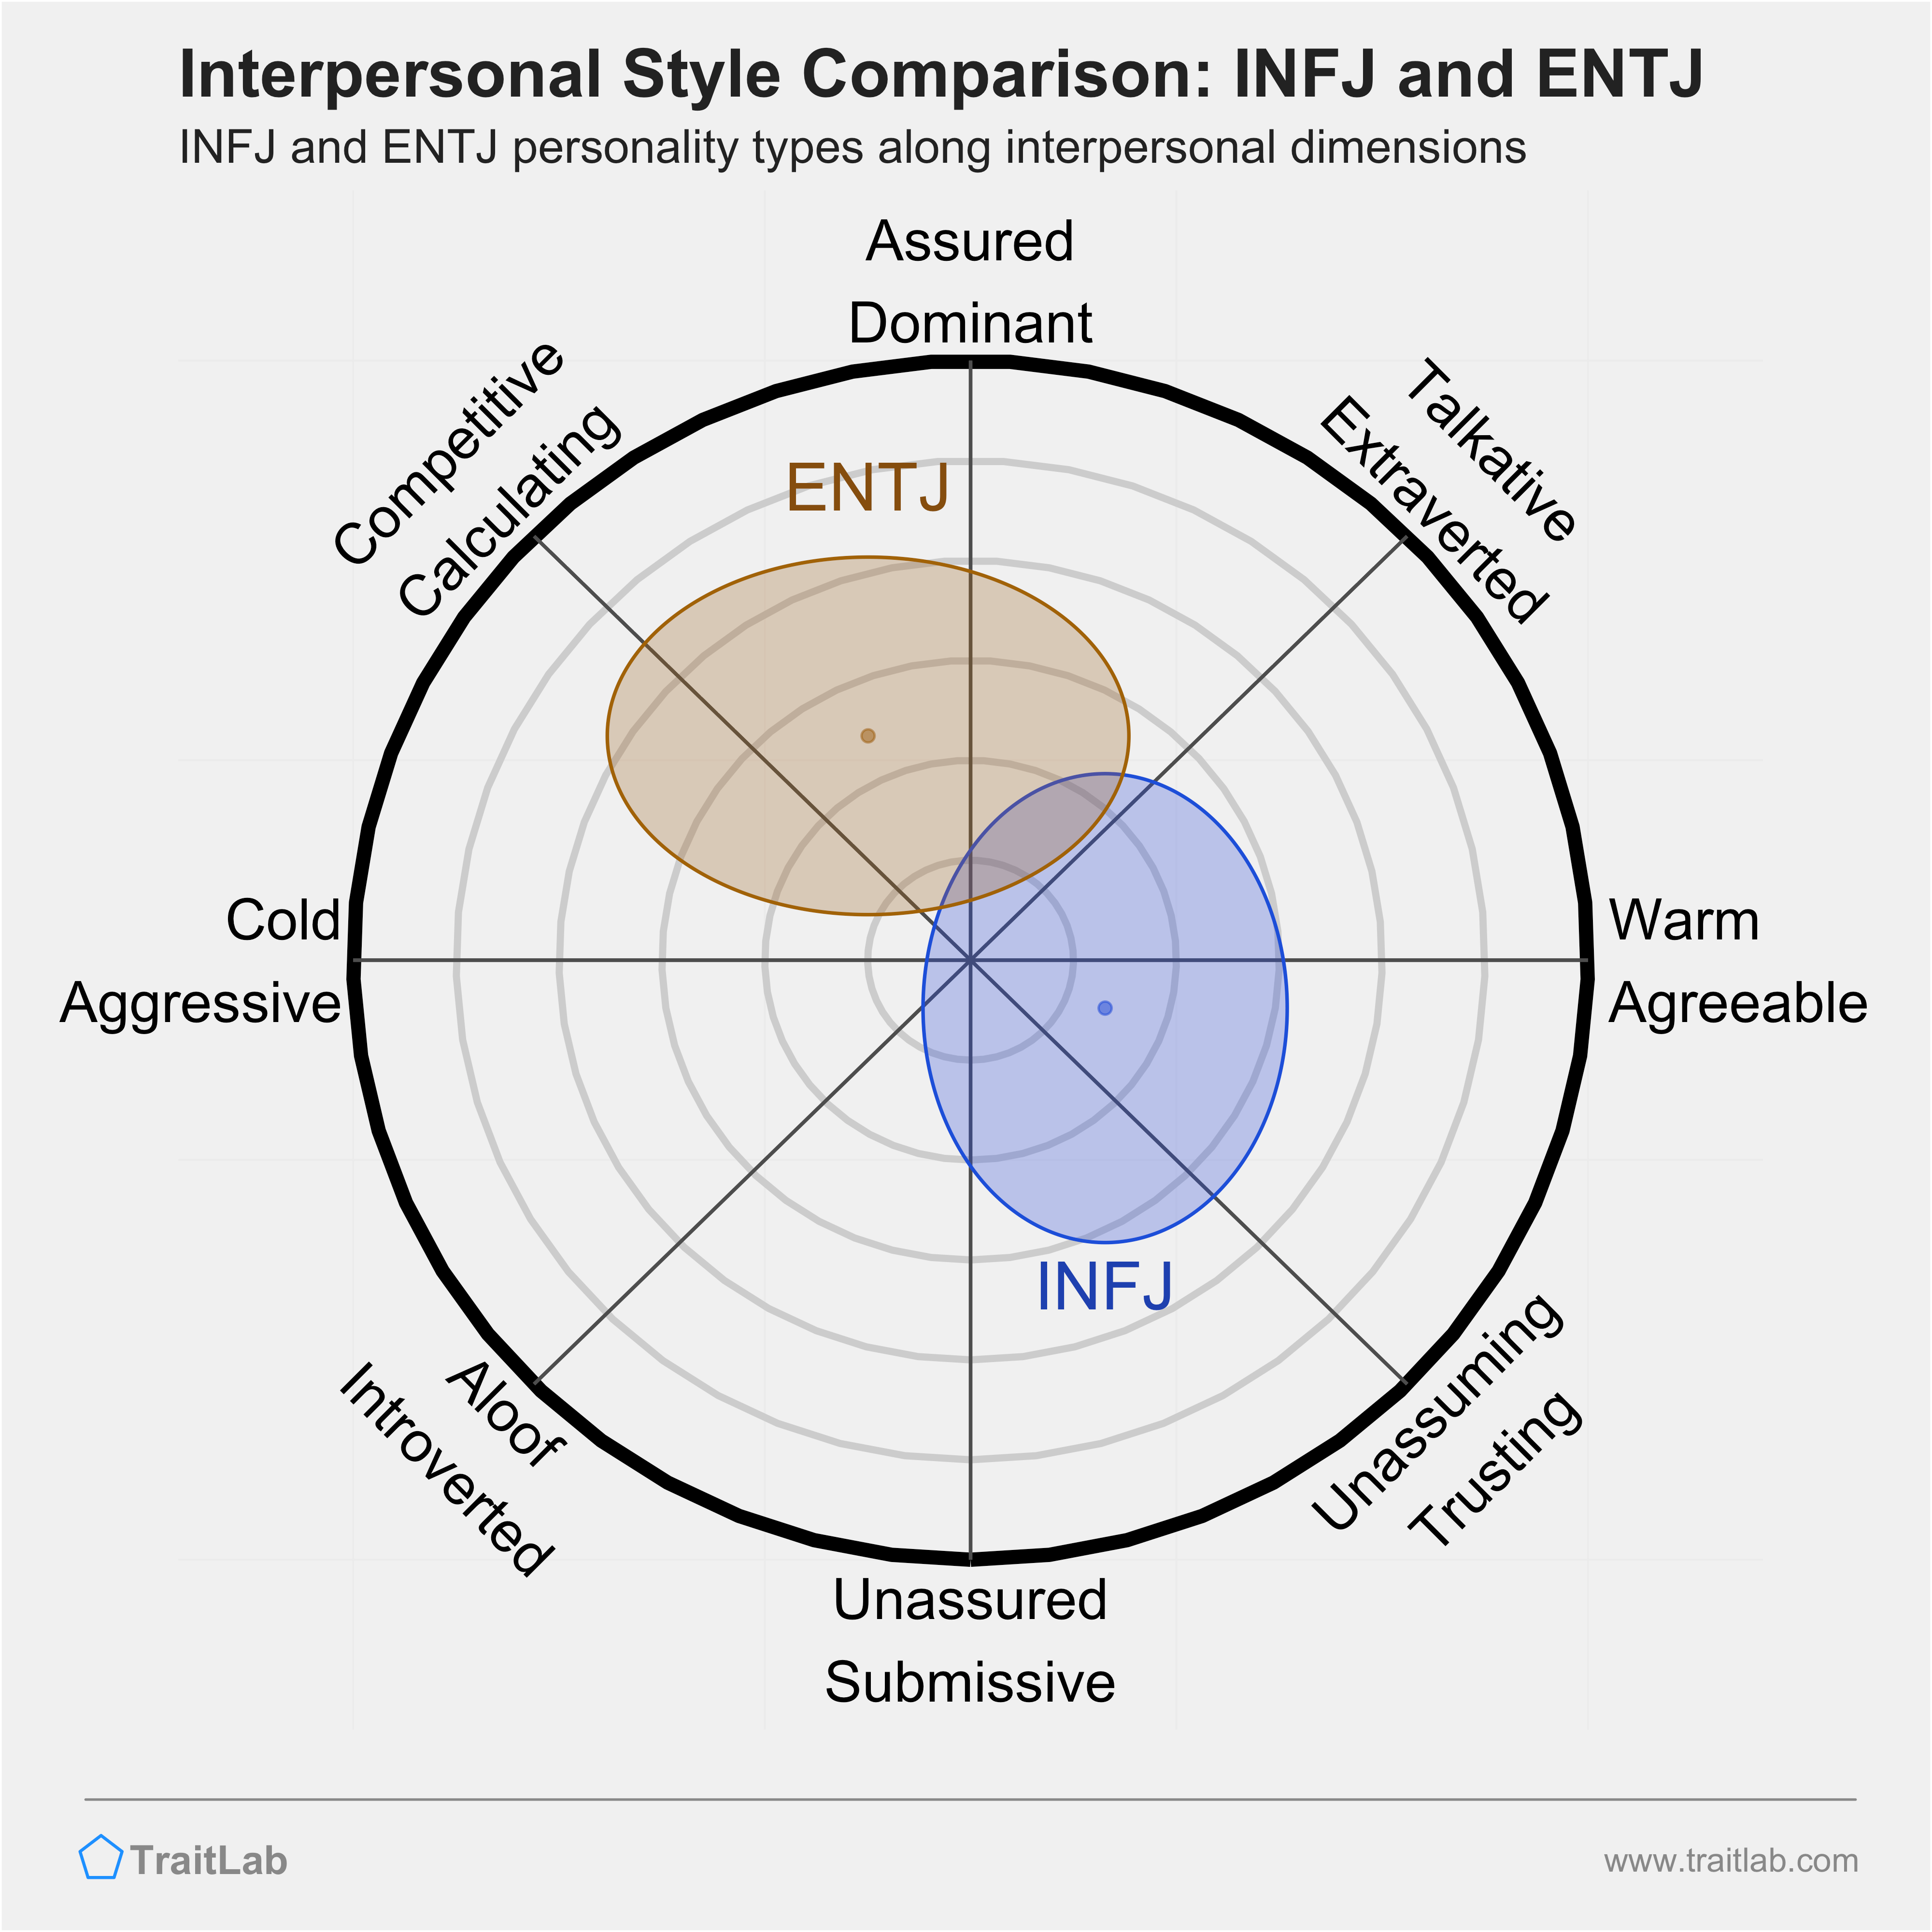 INFJ and ENTJ comparison across interpersonal dimensions